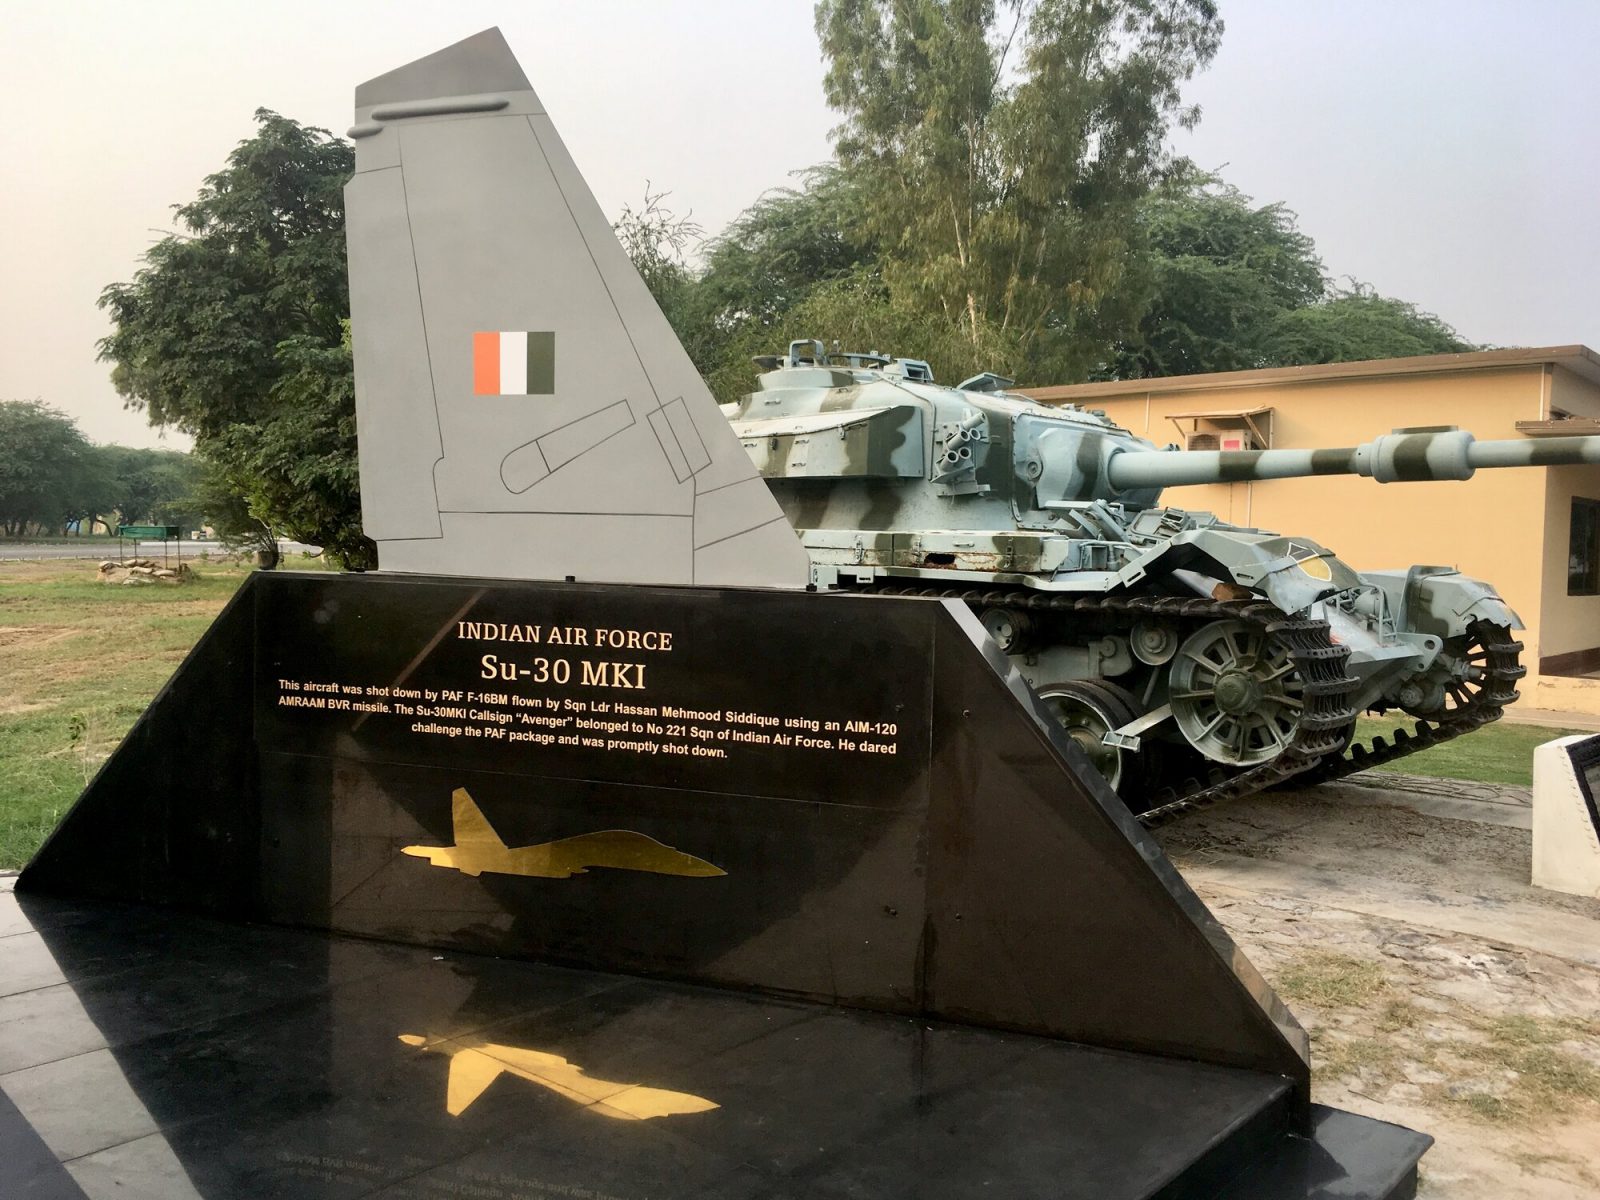 Pakistan Air Force made Operation Swift Retort Memorial at PAF Base Mushaf